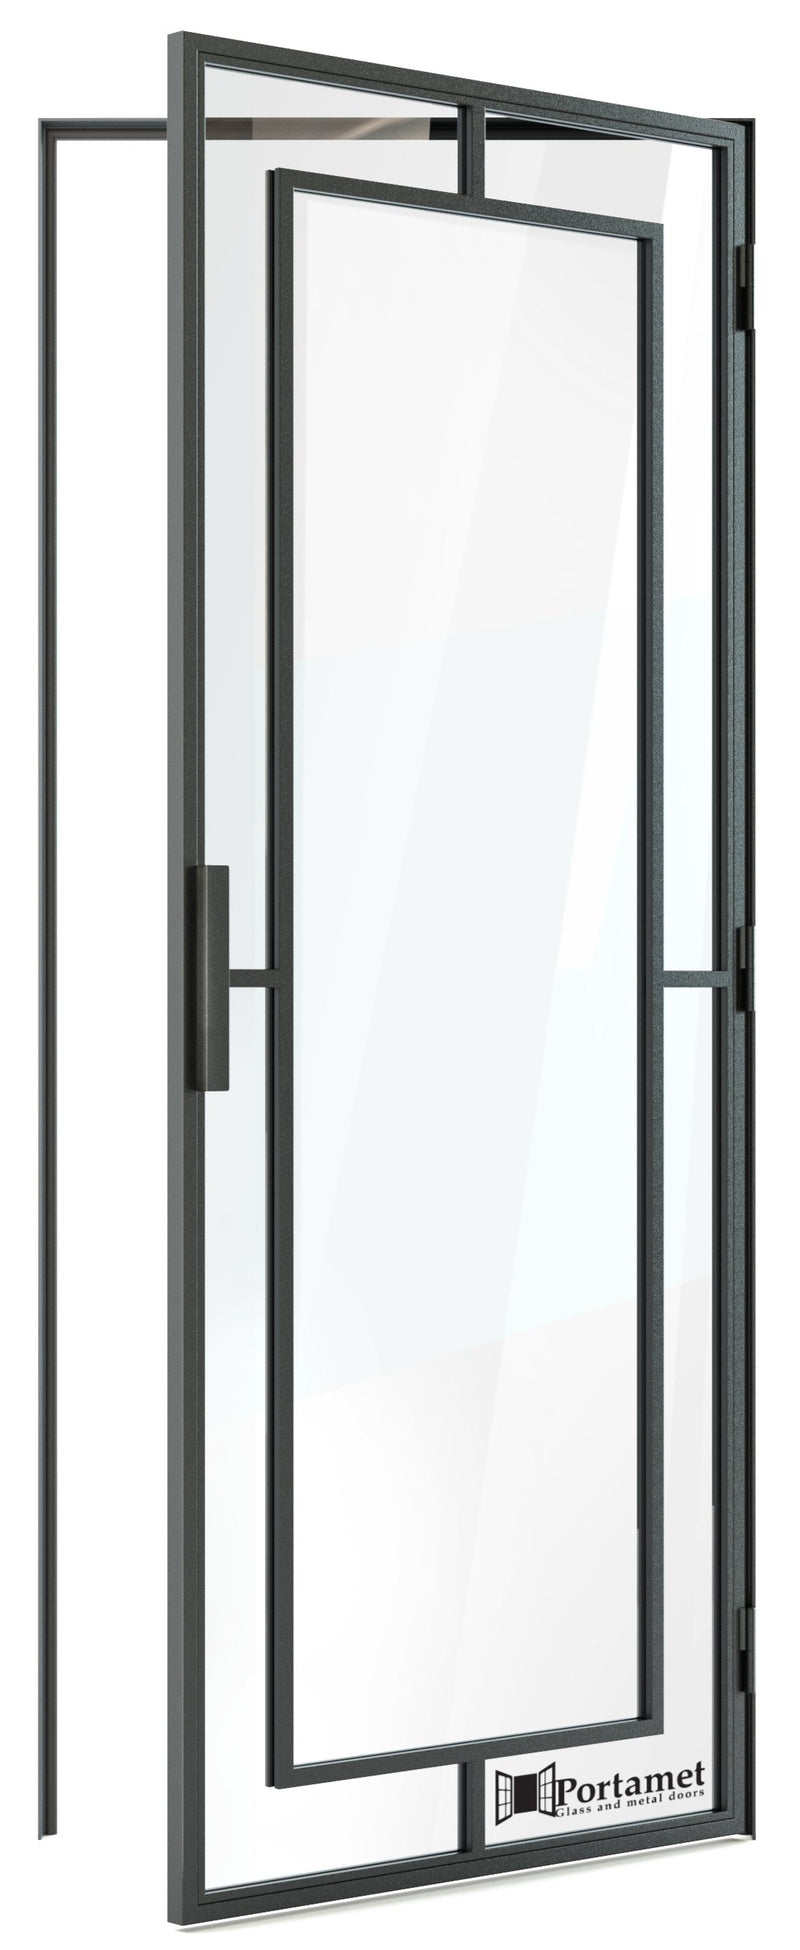 Portamet by Sfarzo - Nero Classic Single Glazed Steel Hinged Door with Frame